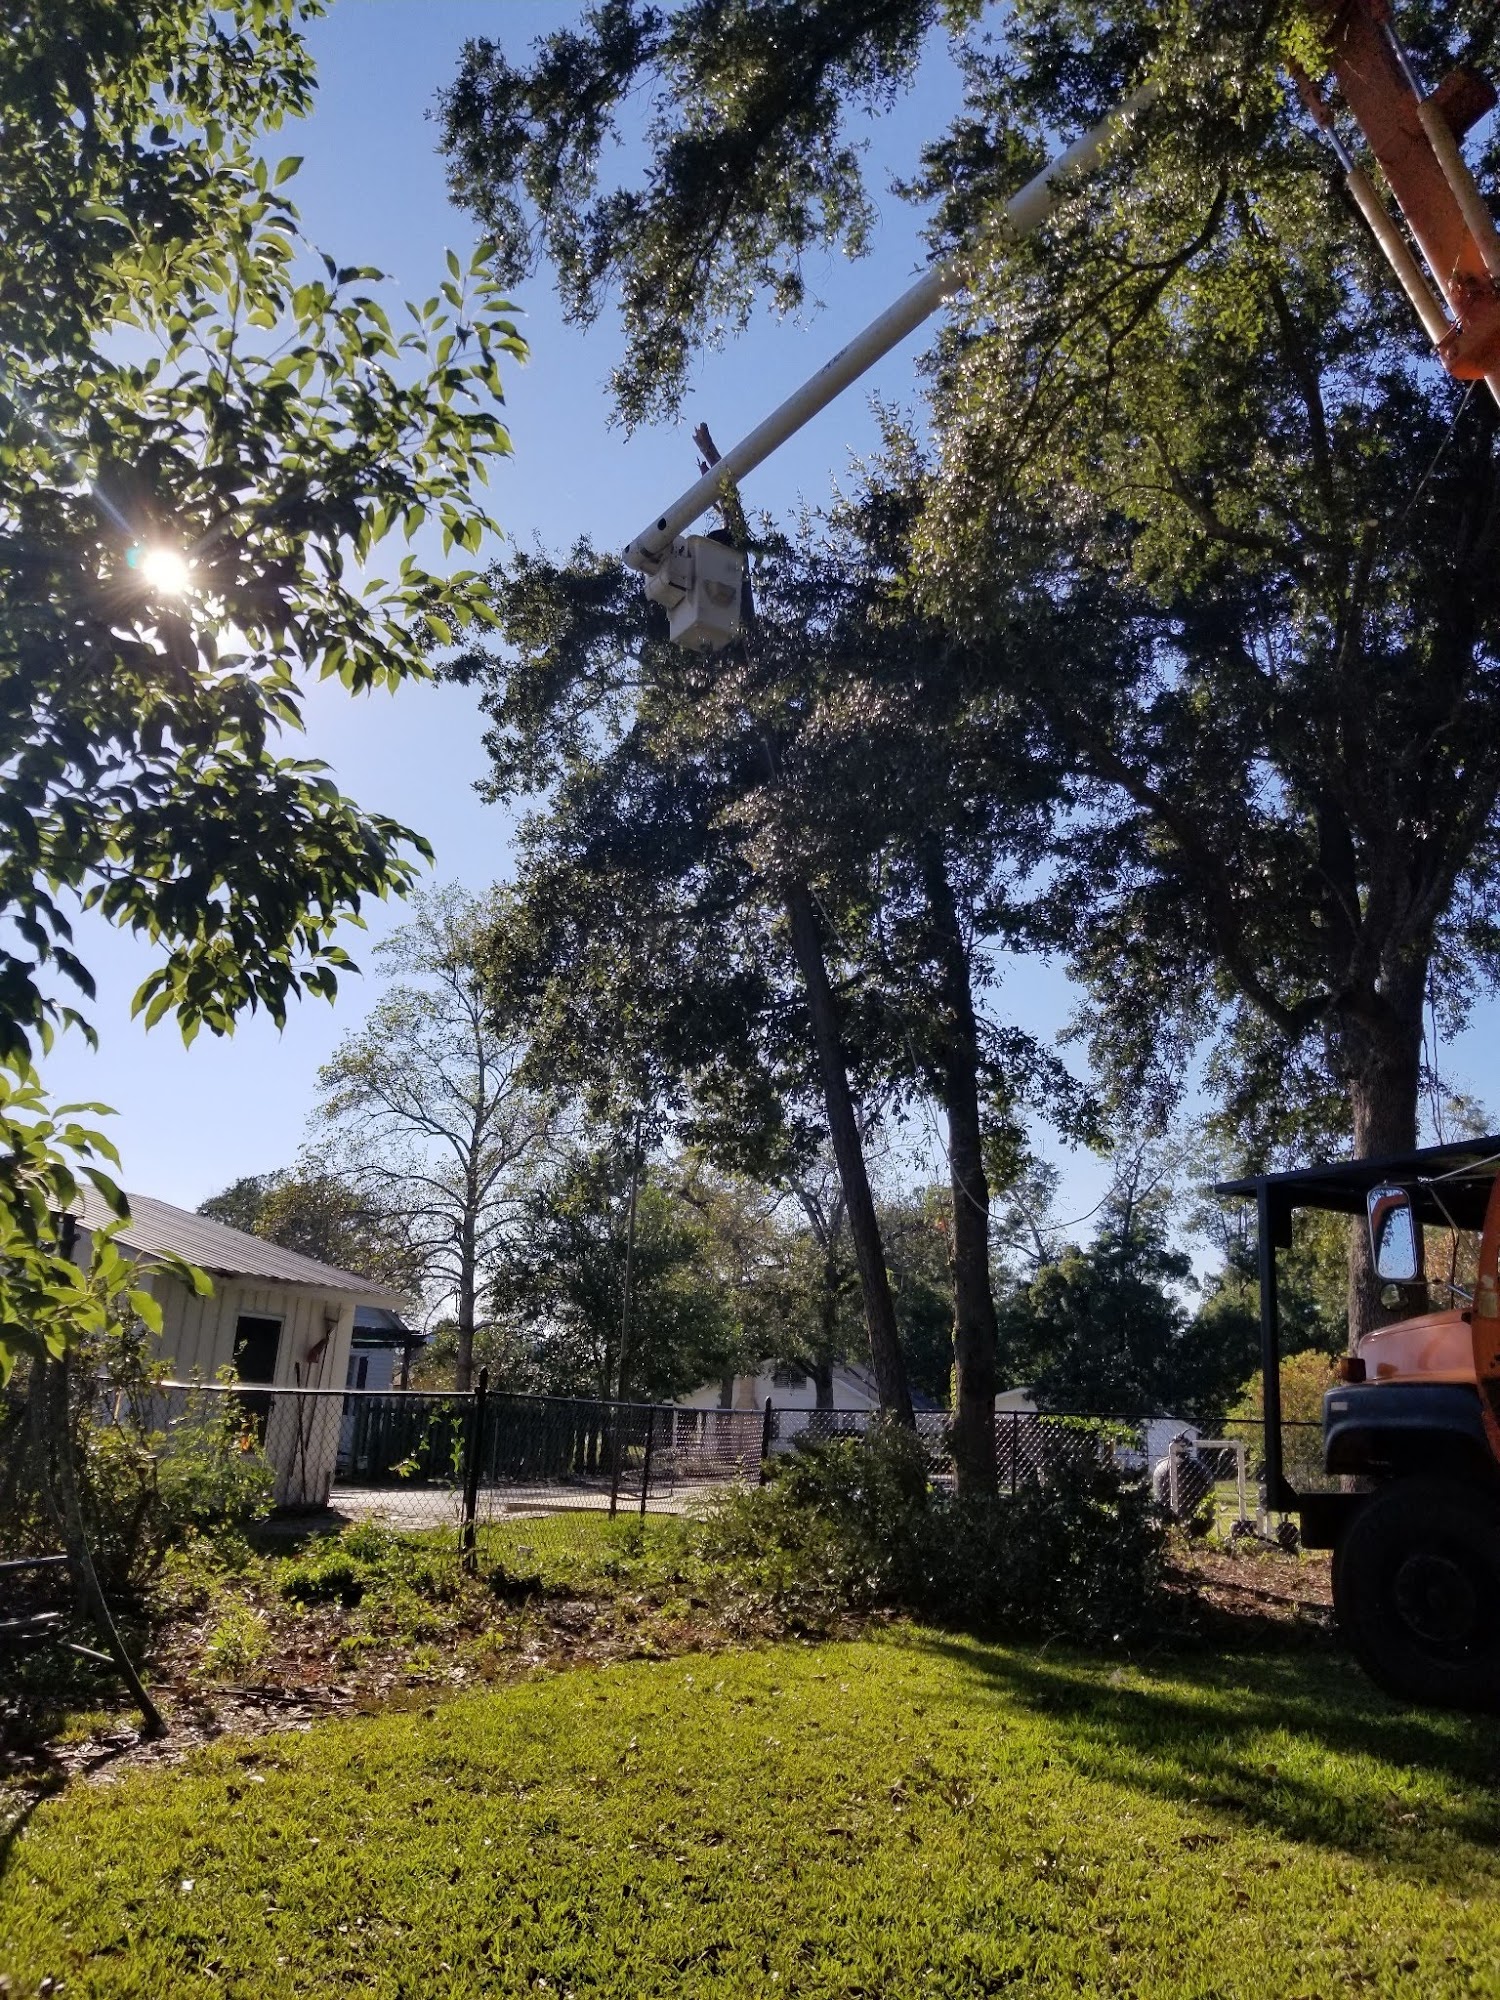 James & Son Tree and Crane Service 4022 Bryan St, Greenwood Florida 32443